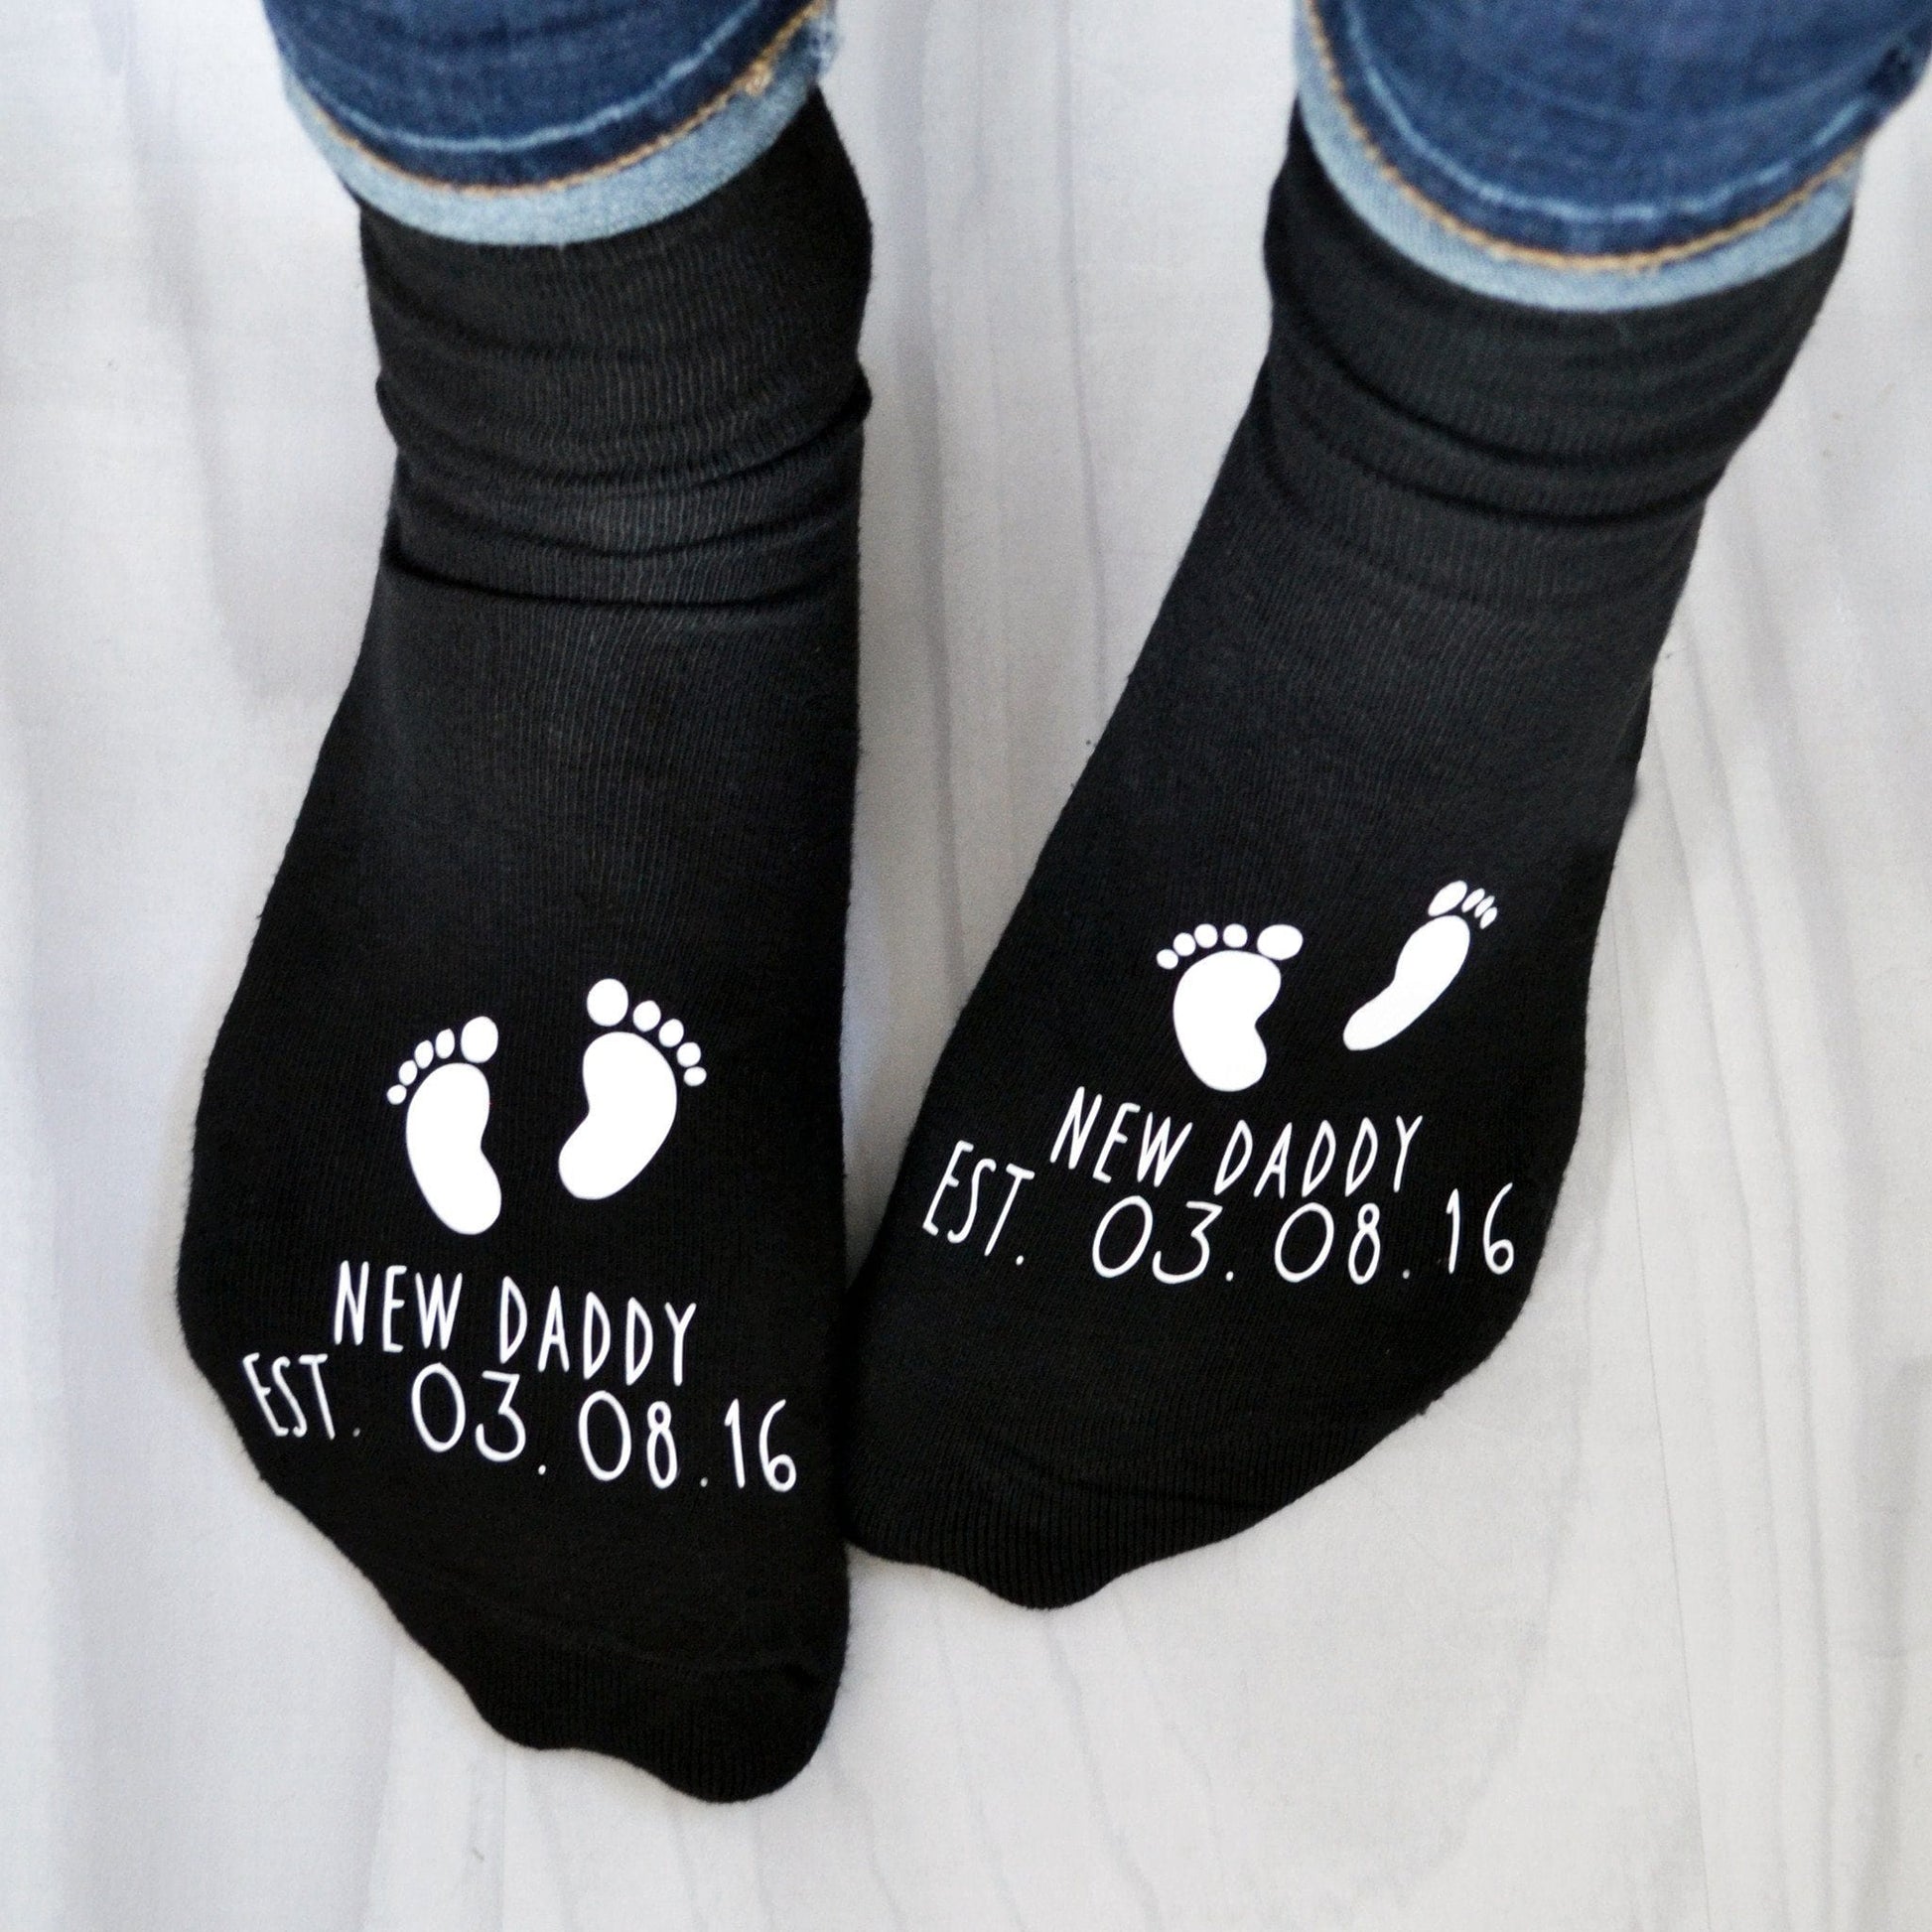 New Daddy Personalised Socks, Socks, - ALPHS 